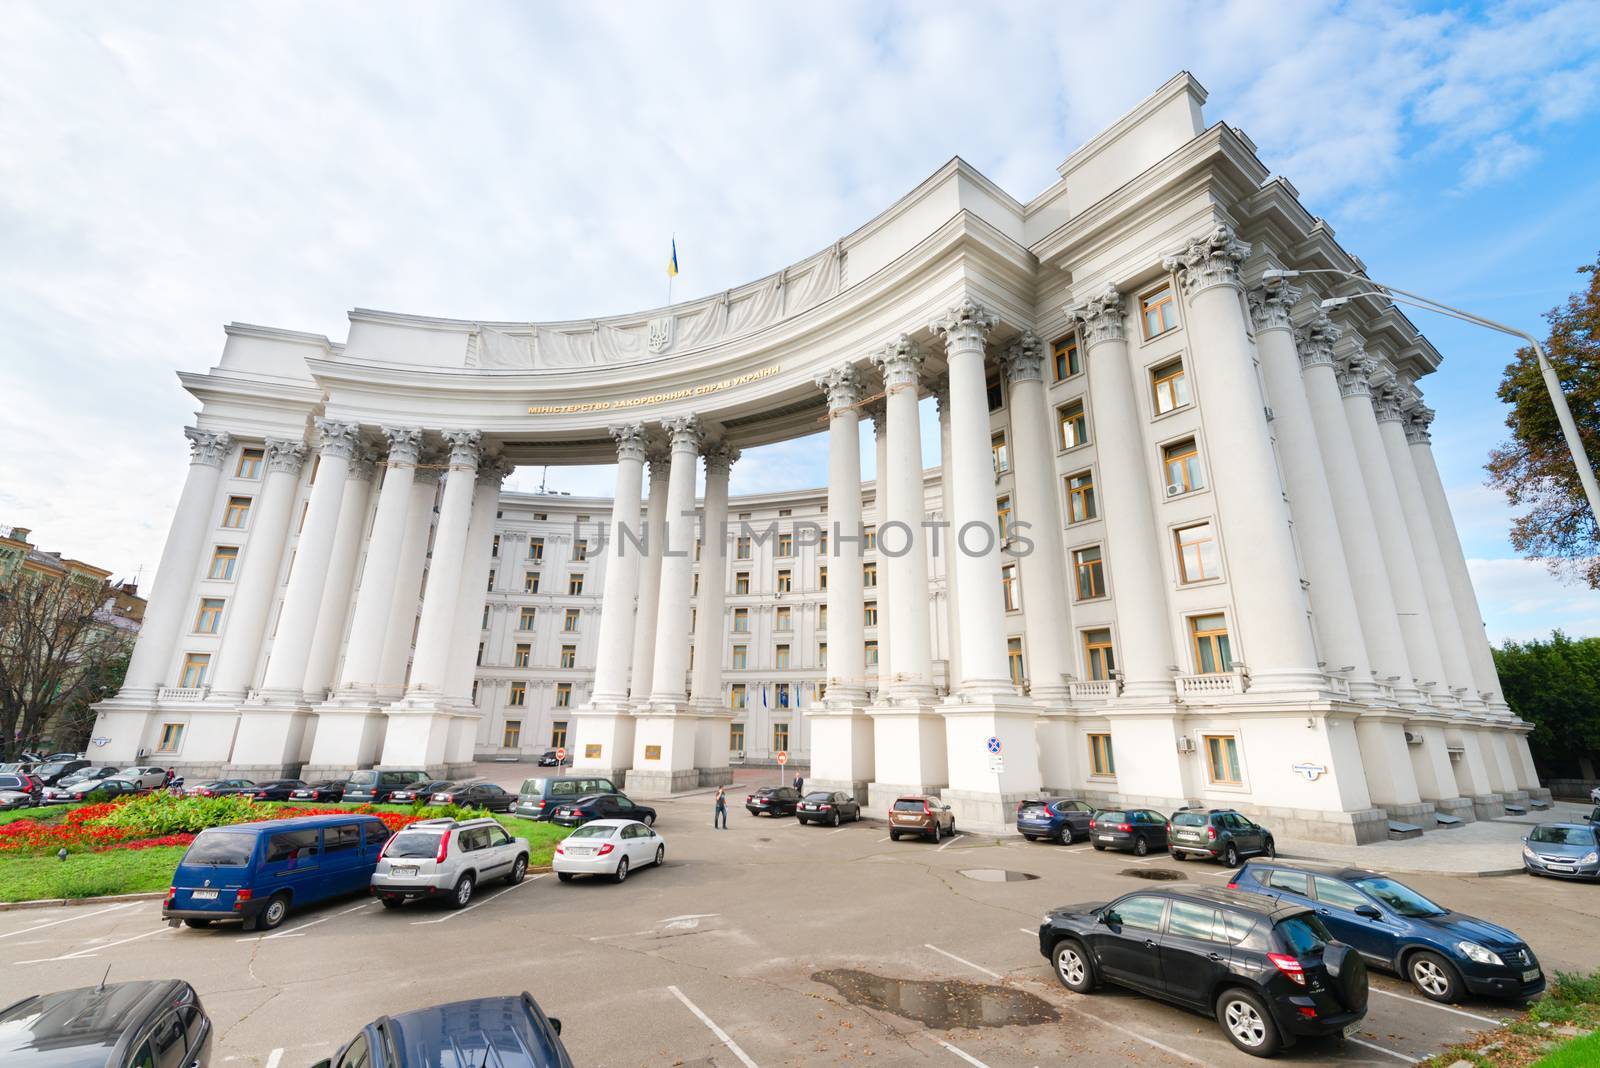 KIEV, UKRAINE - SEP 17, 2013: Main entrance and facade of Ministry of Foreign Affairs of Ukraine building, Kyev, Ukraine